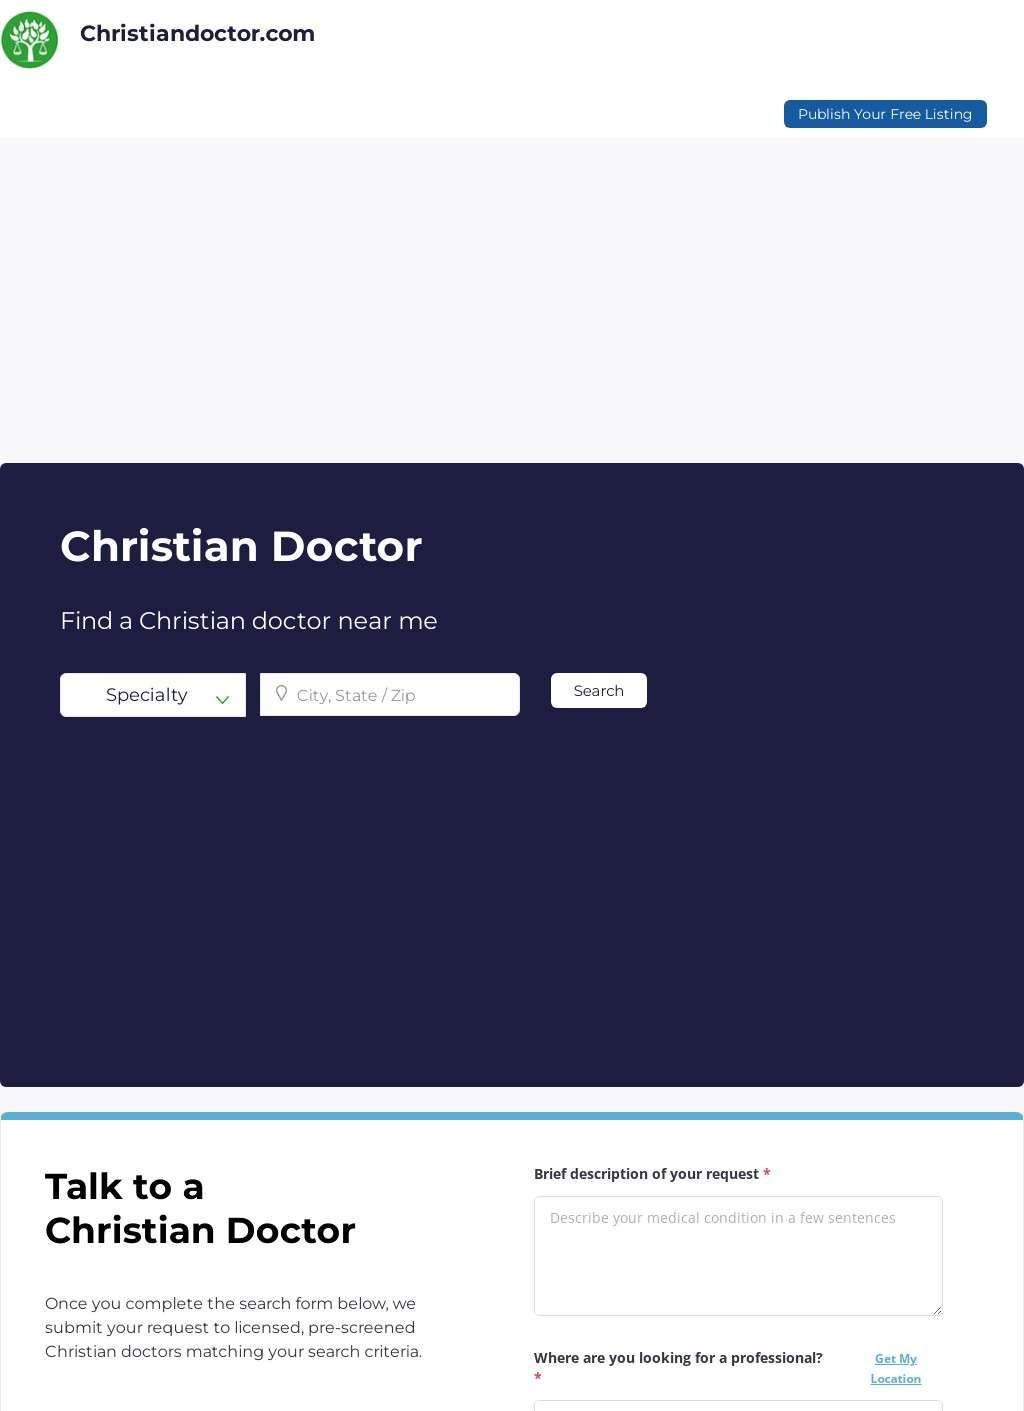 Christian Doctors